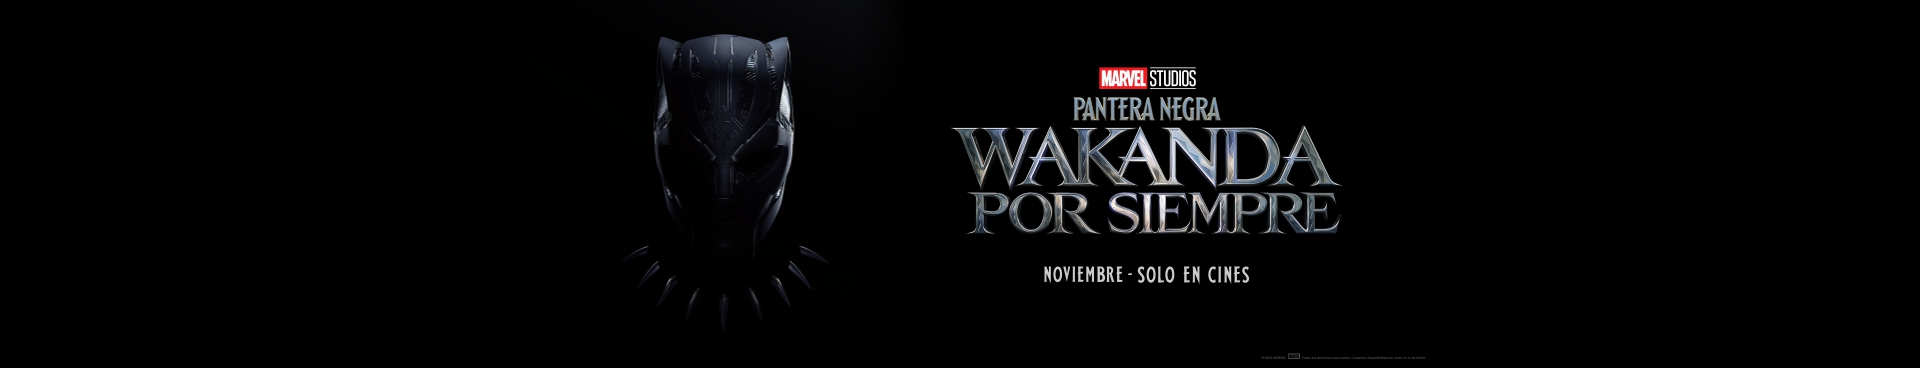 Pantera Negra Wakanda por siempre